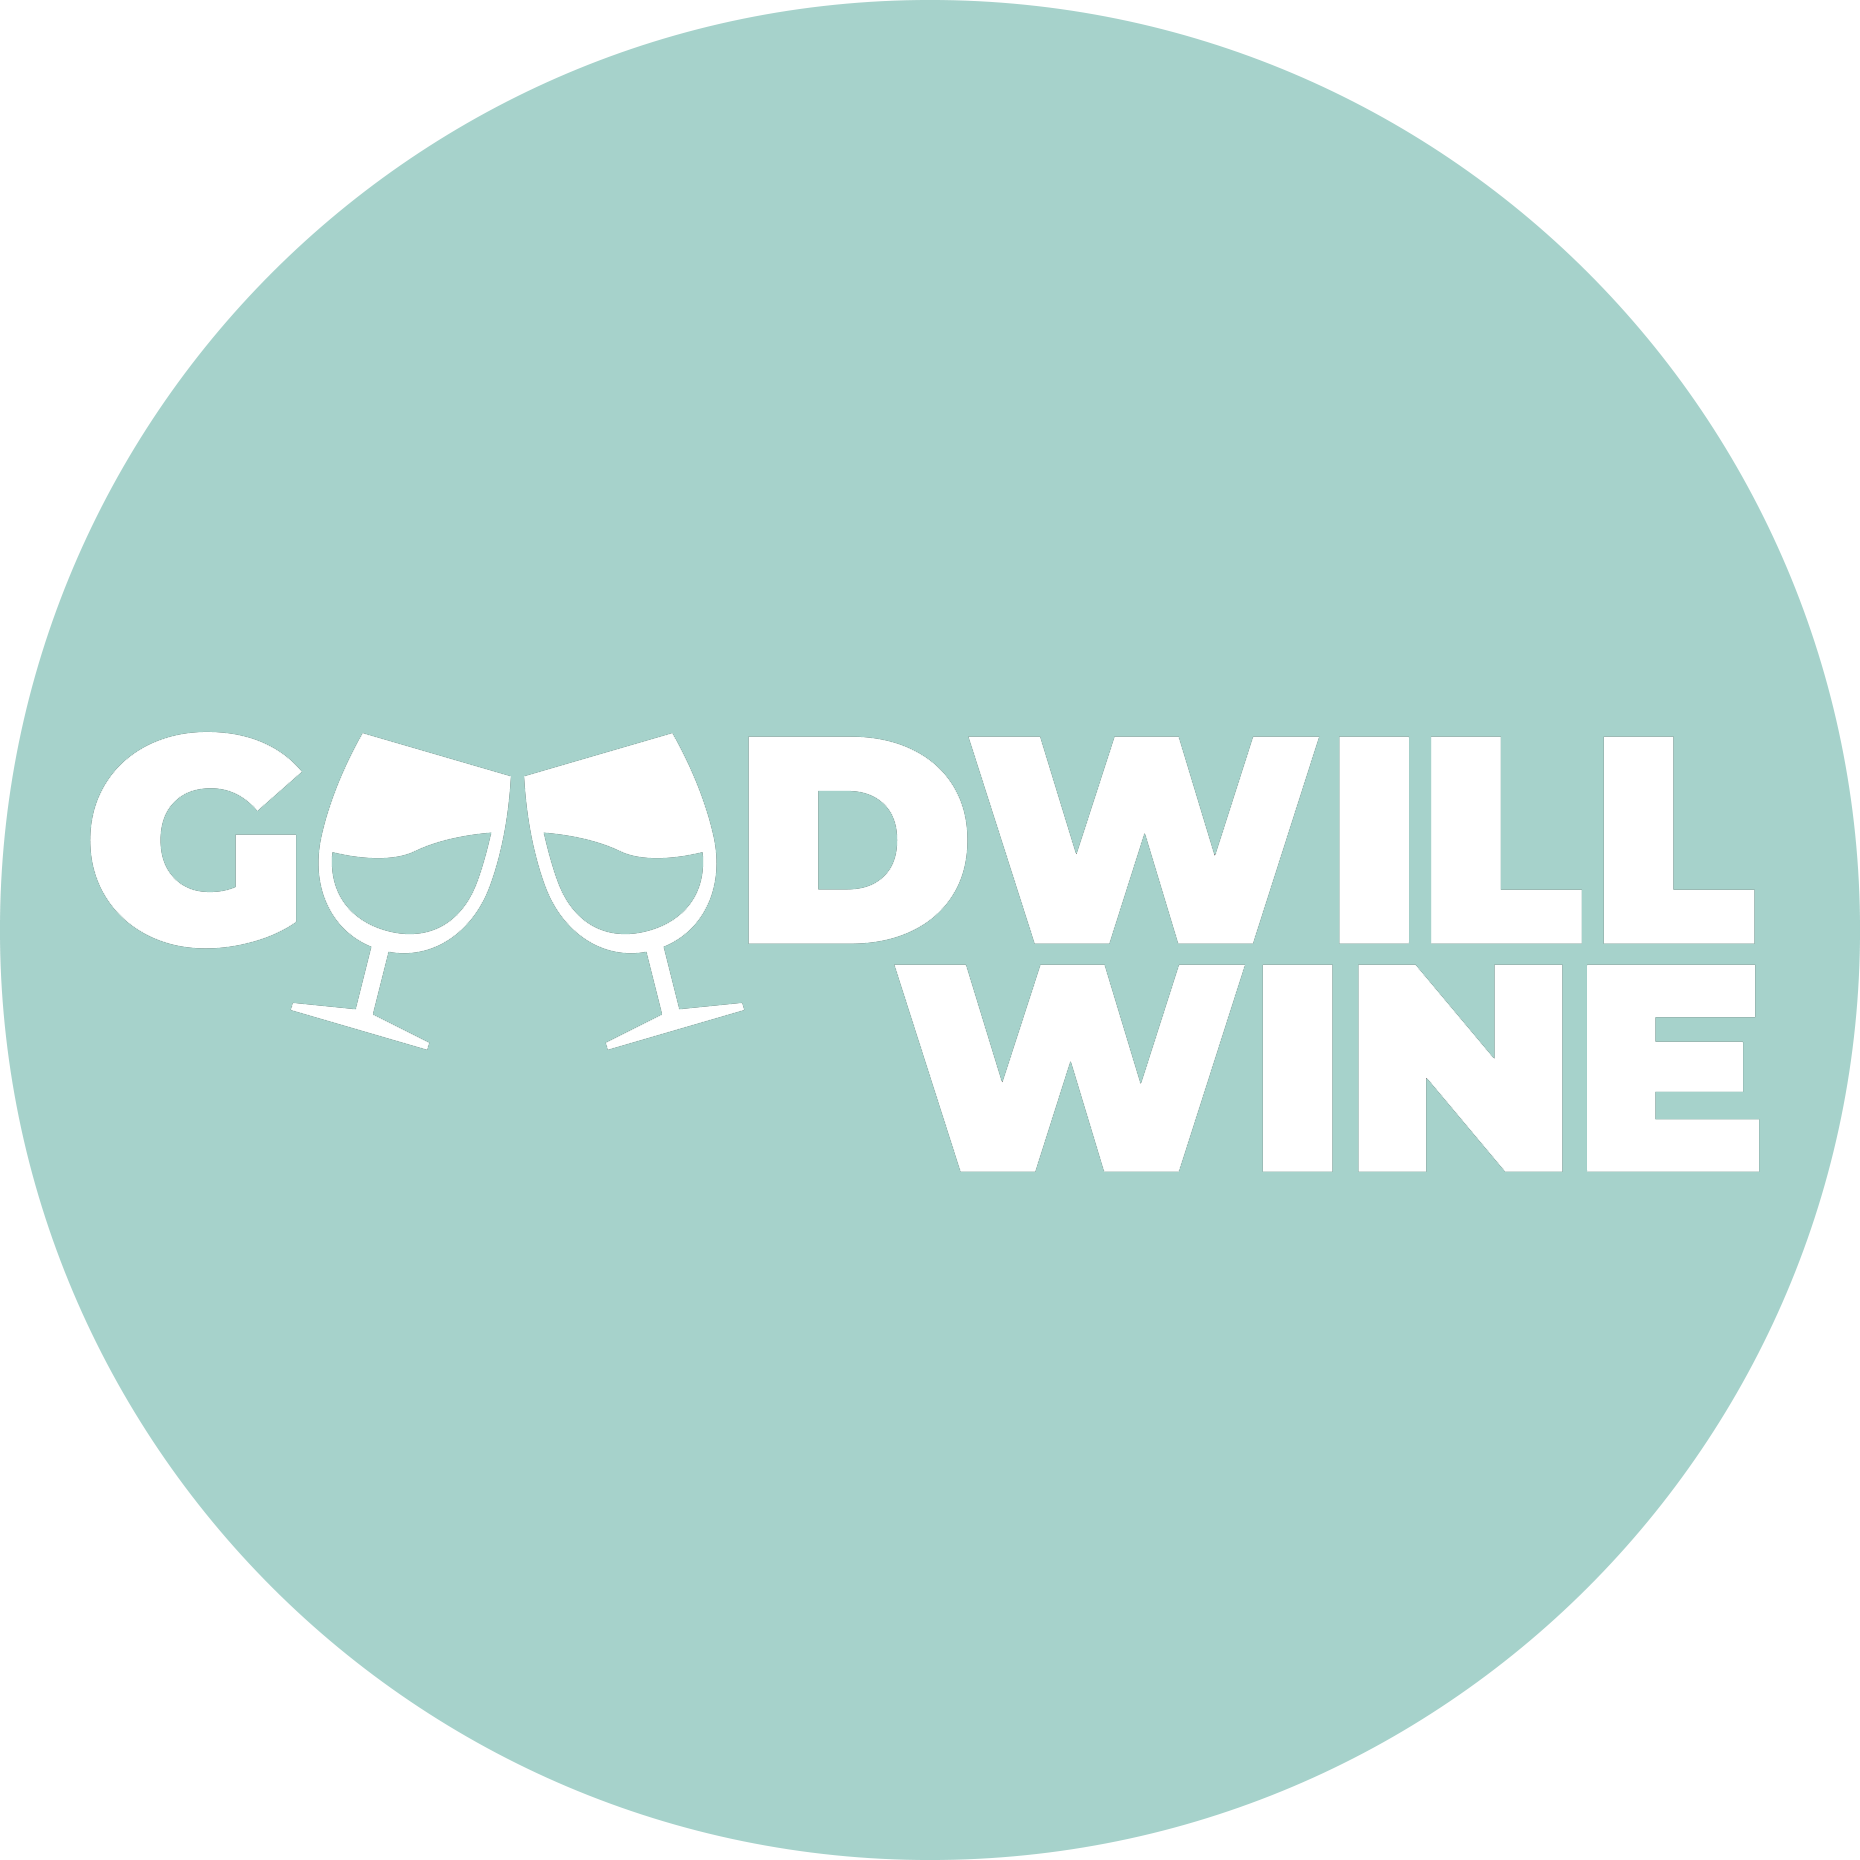 goodwillwine.com.au